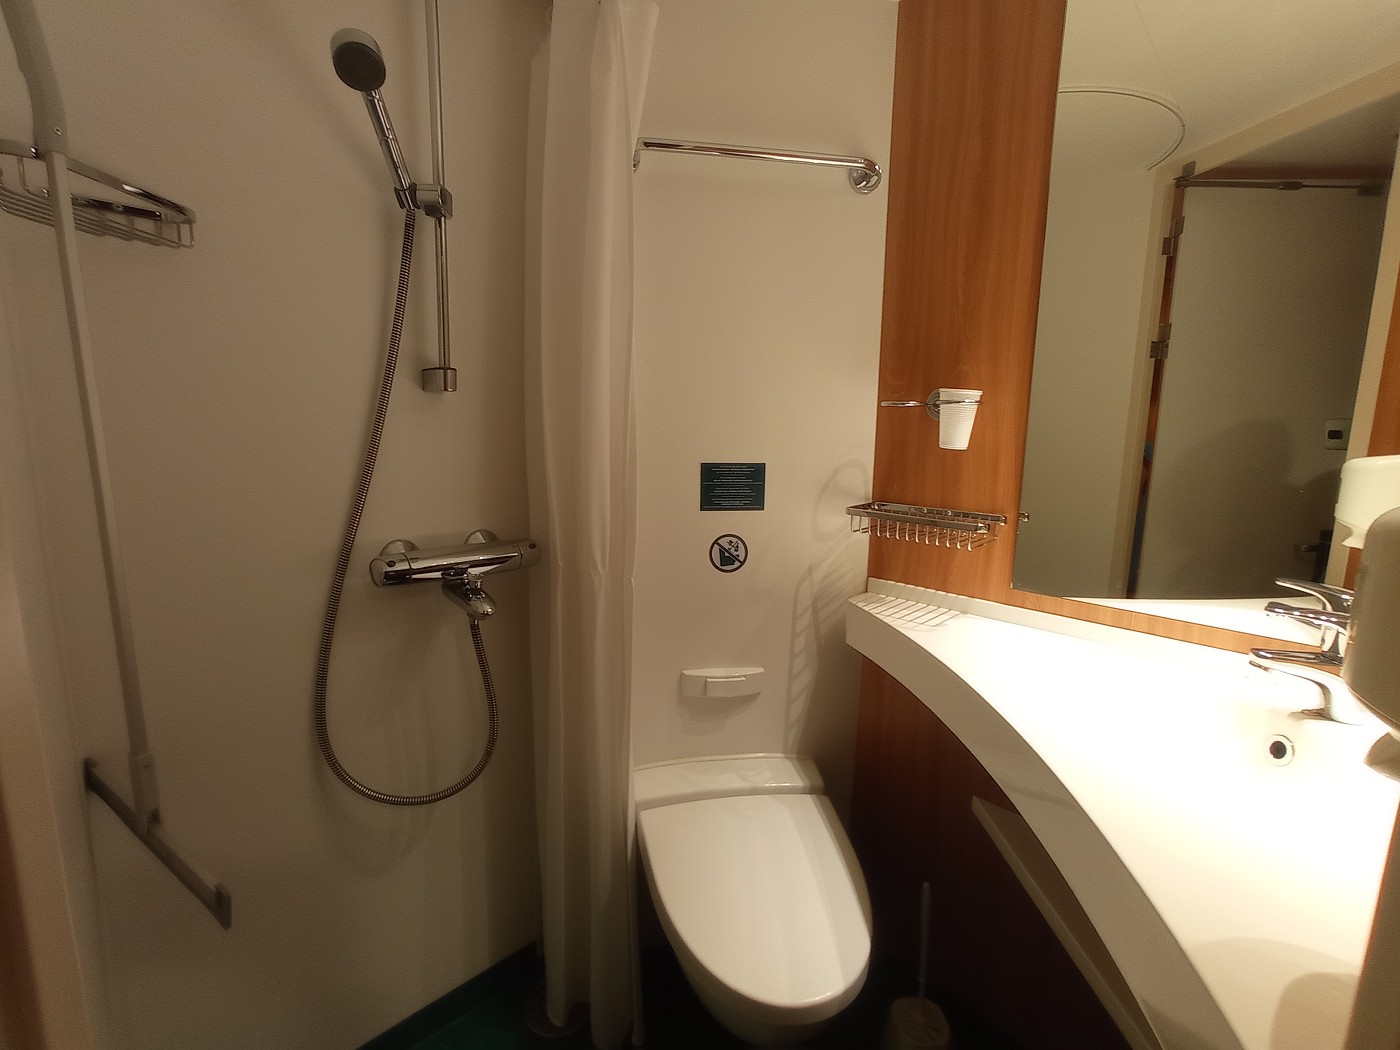 34 bathroom shower toilet Baltic Queen cruiseferry Åland